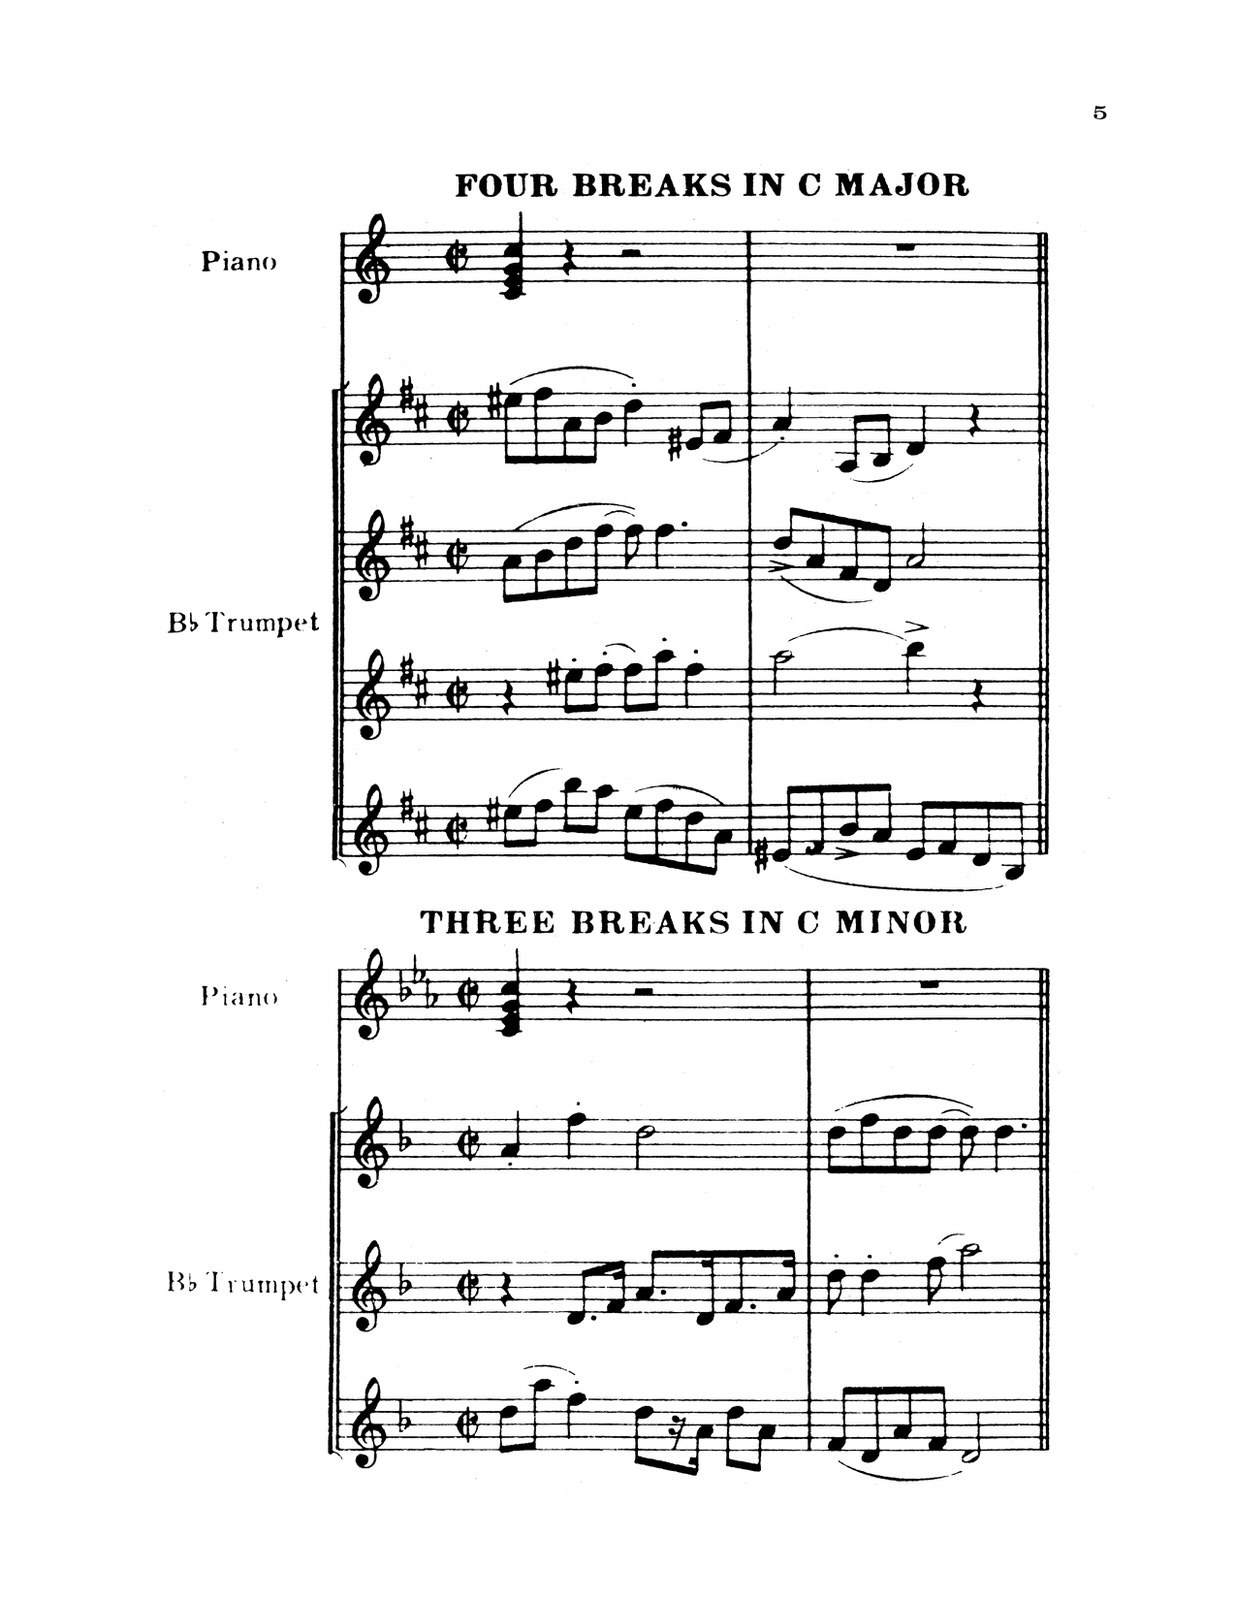 emily jazz trumpet solo transcriptions